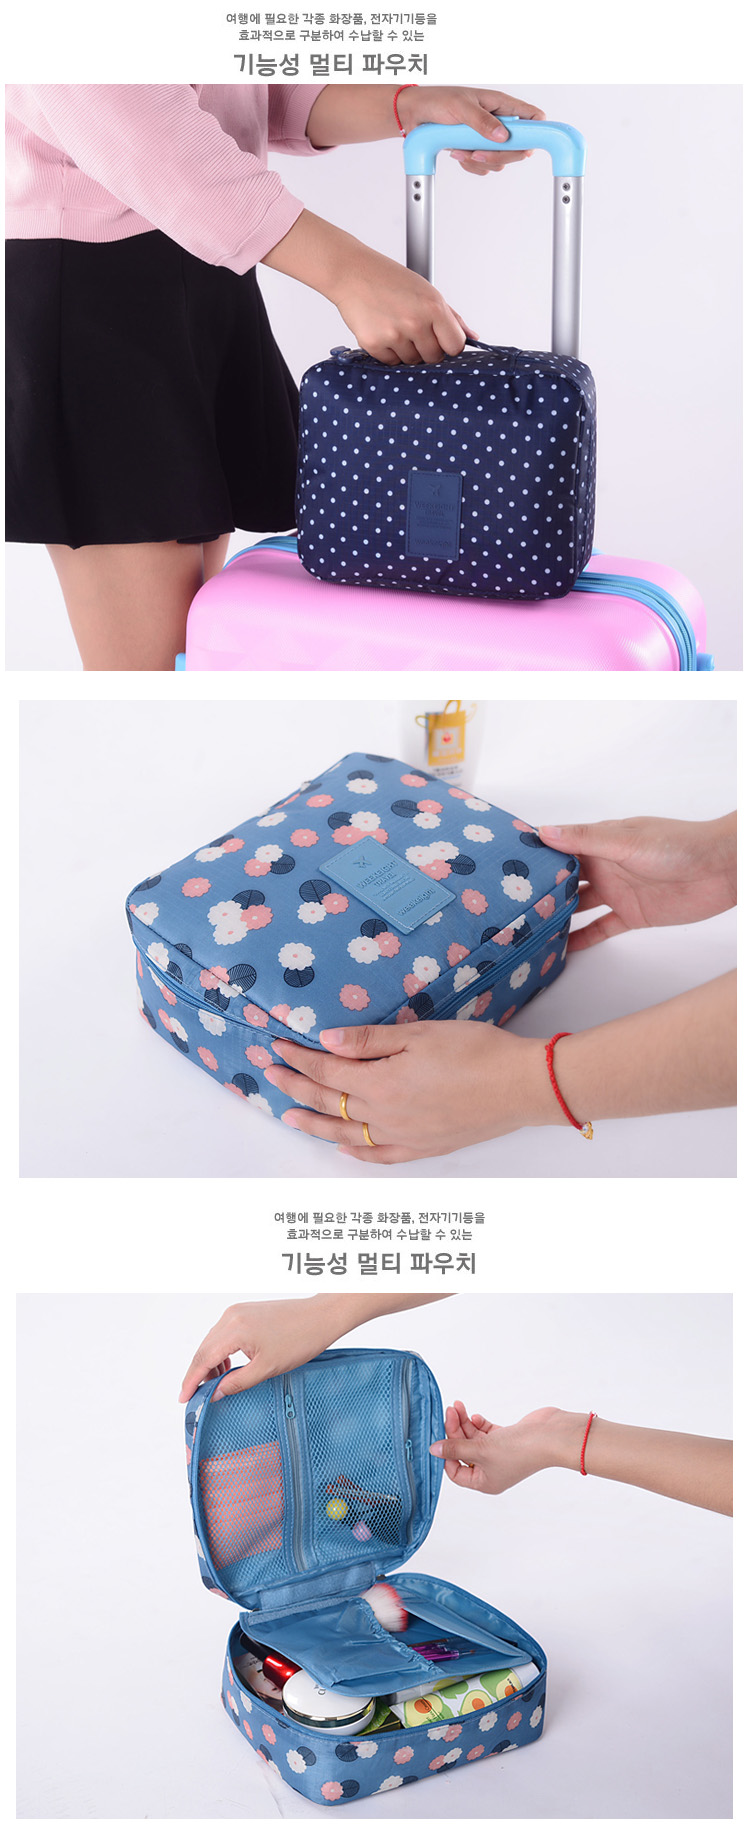 Three generation of Korean portable travel bag travel travel travel necessary ladies waterproof bag make-up bag7